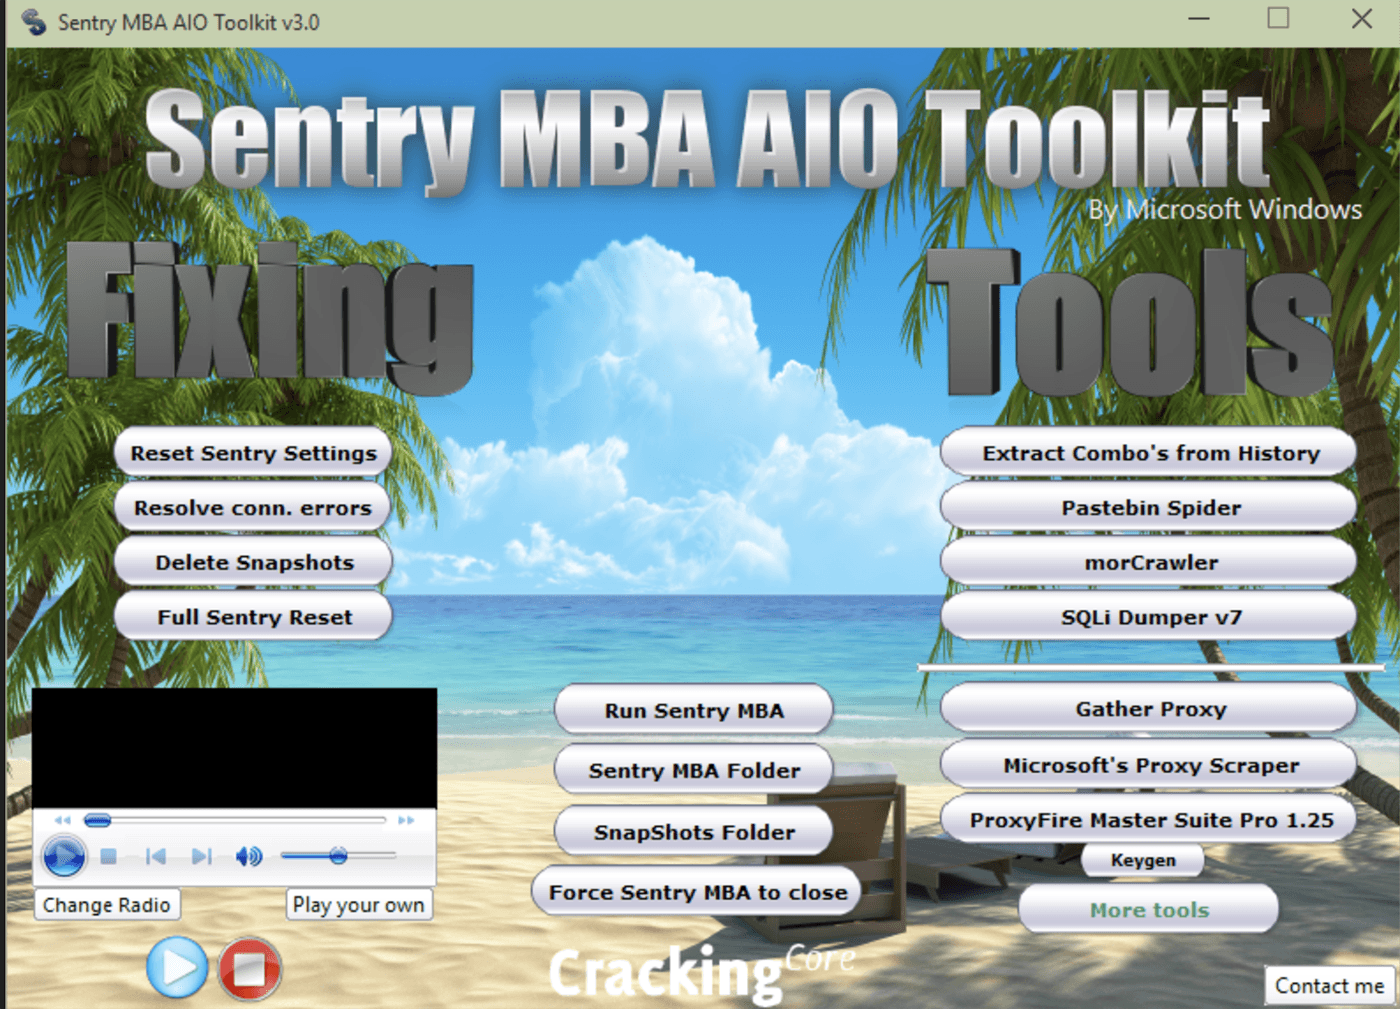 Sentry MBA AIO Toolkit